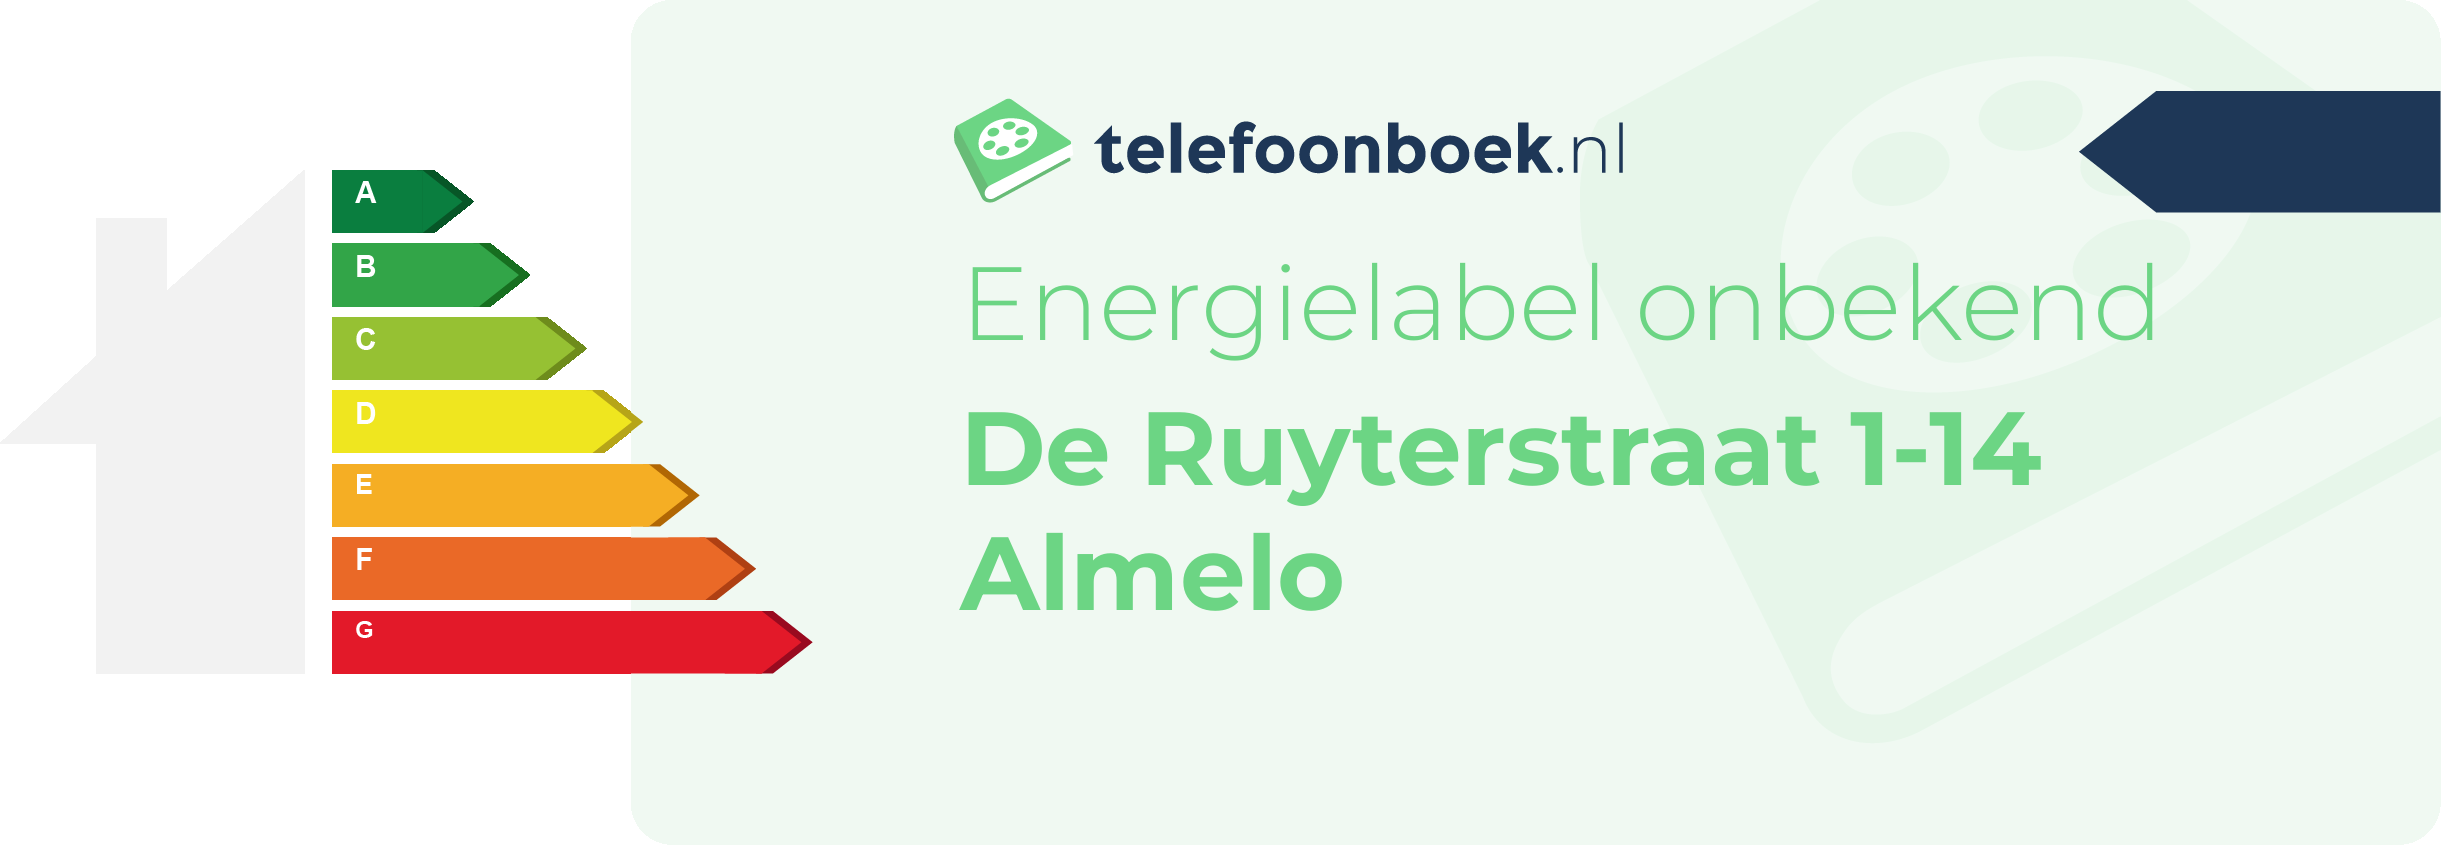 Energielabel De Ruyterstraat 1-14 Almelo